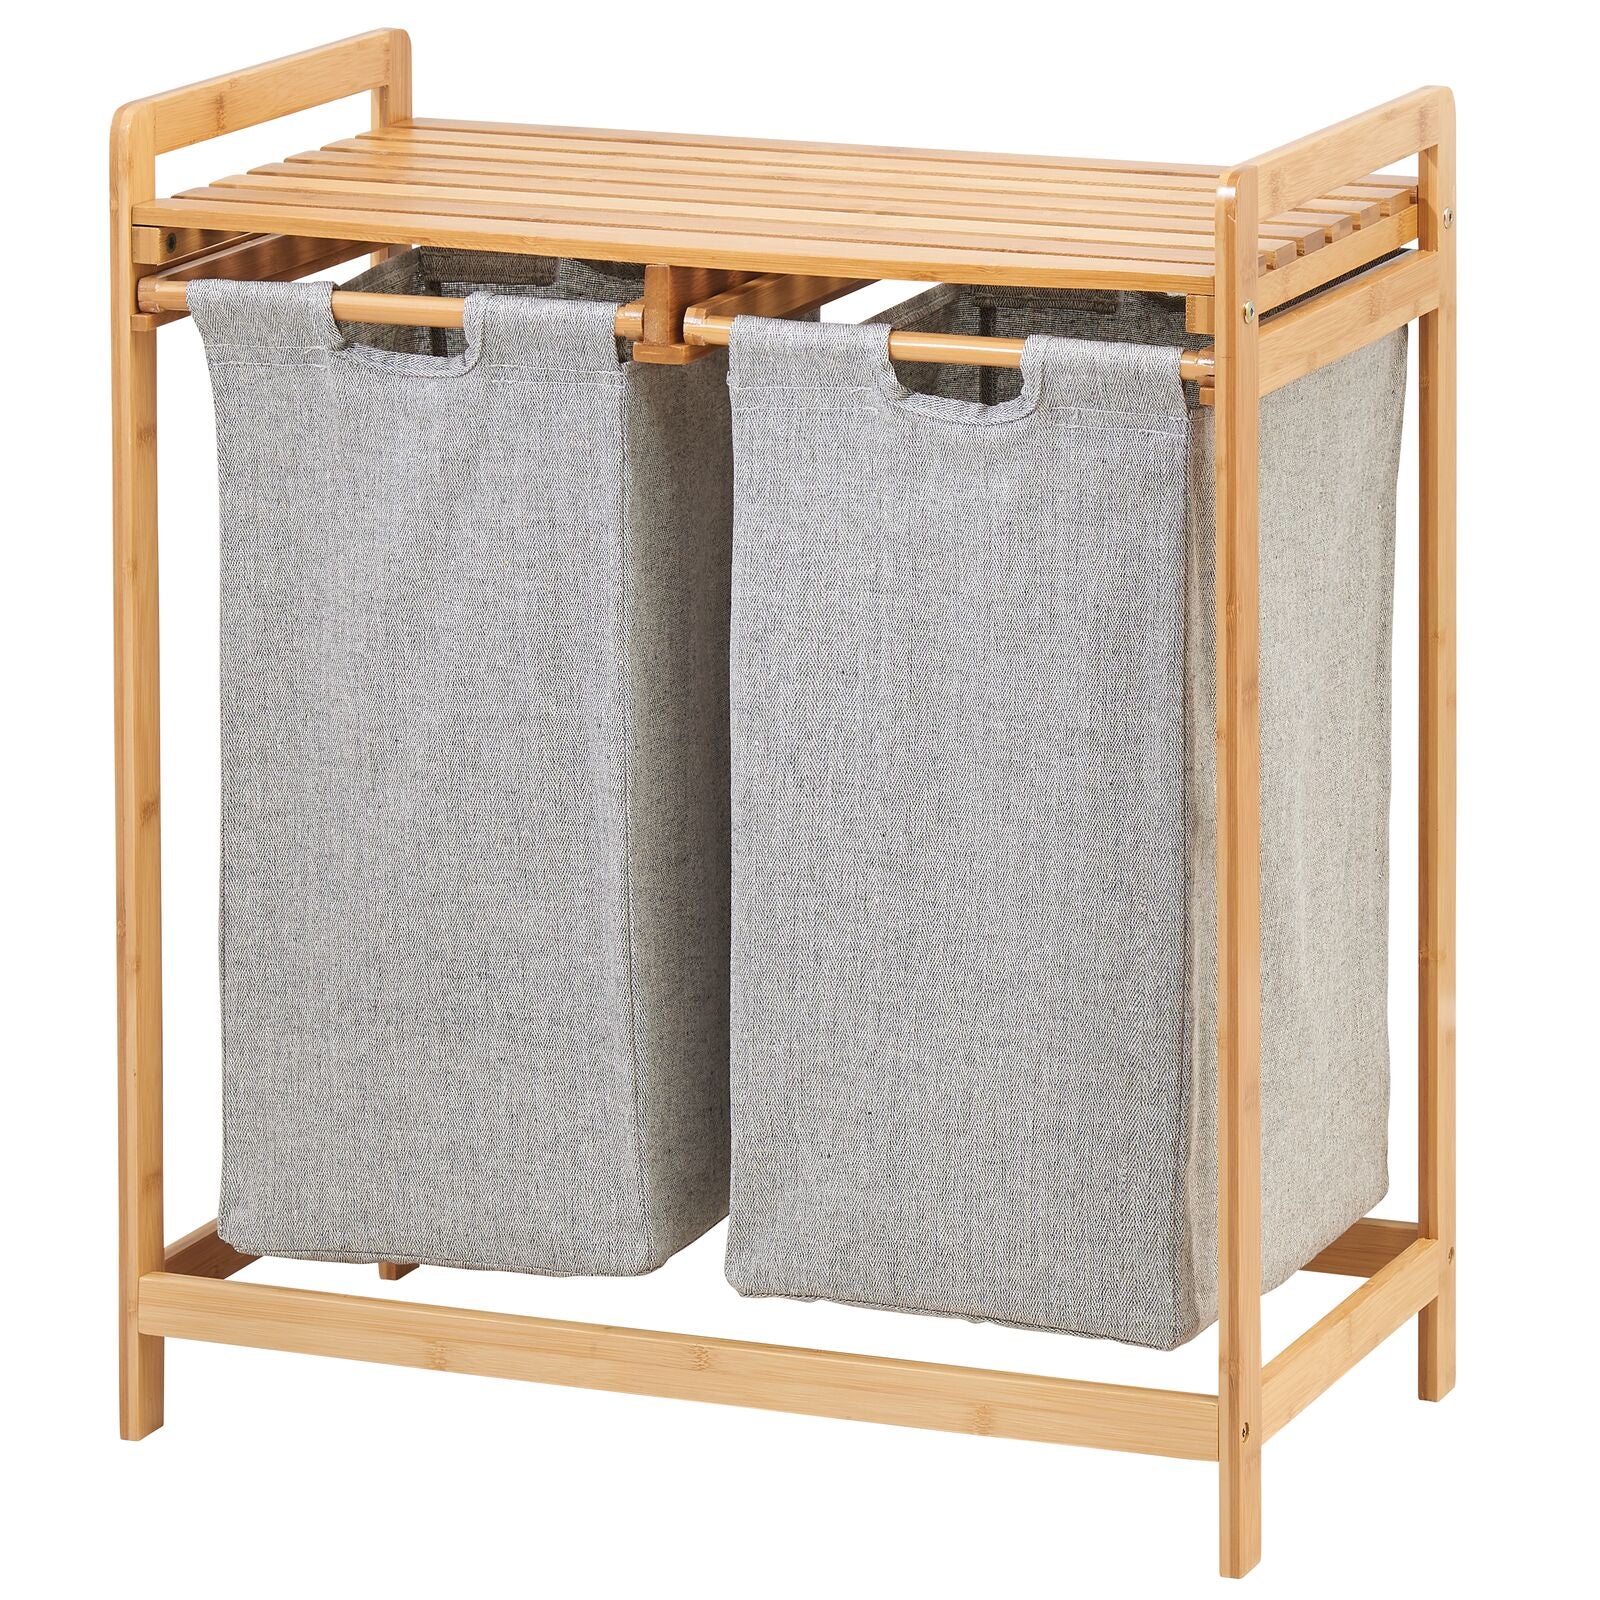 Bamboo Laundry Hamper with Rack,Laundry Basket with 3 Shelves,Laundry  Hamper Cabinet Organizer,Wooden Laundry Sorter,Bathroom Storage Shelf  Cabinet